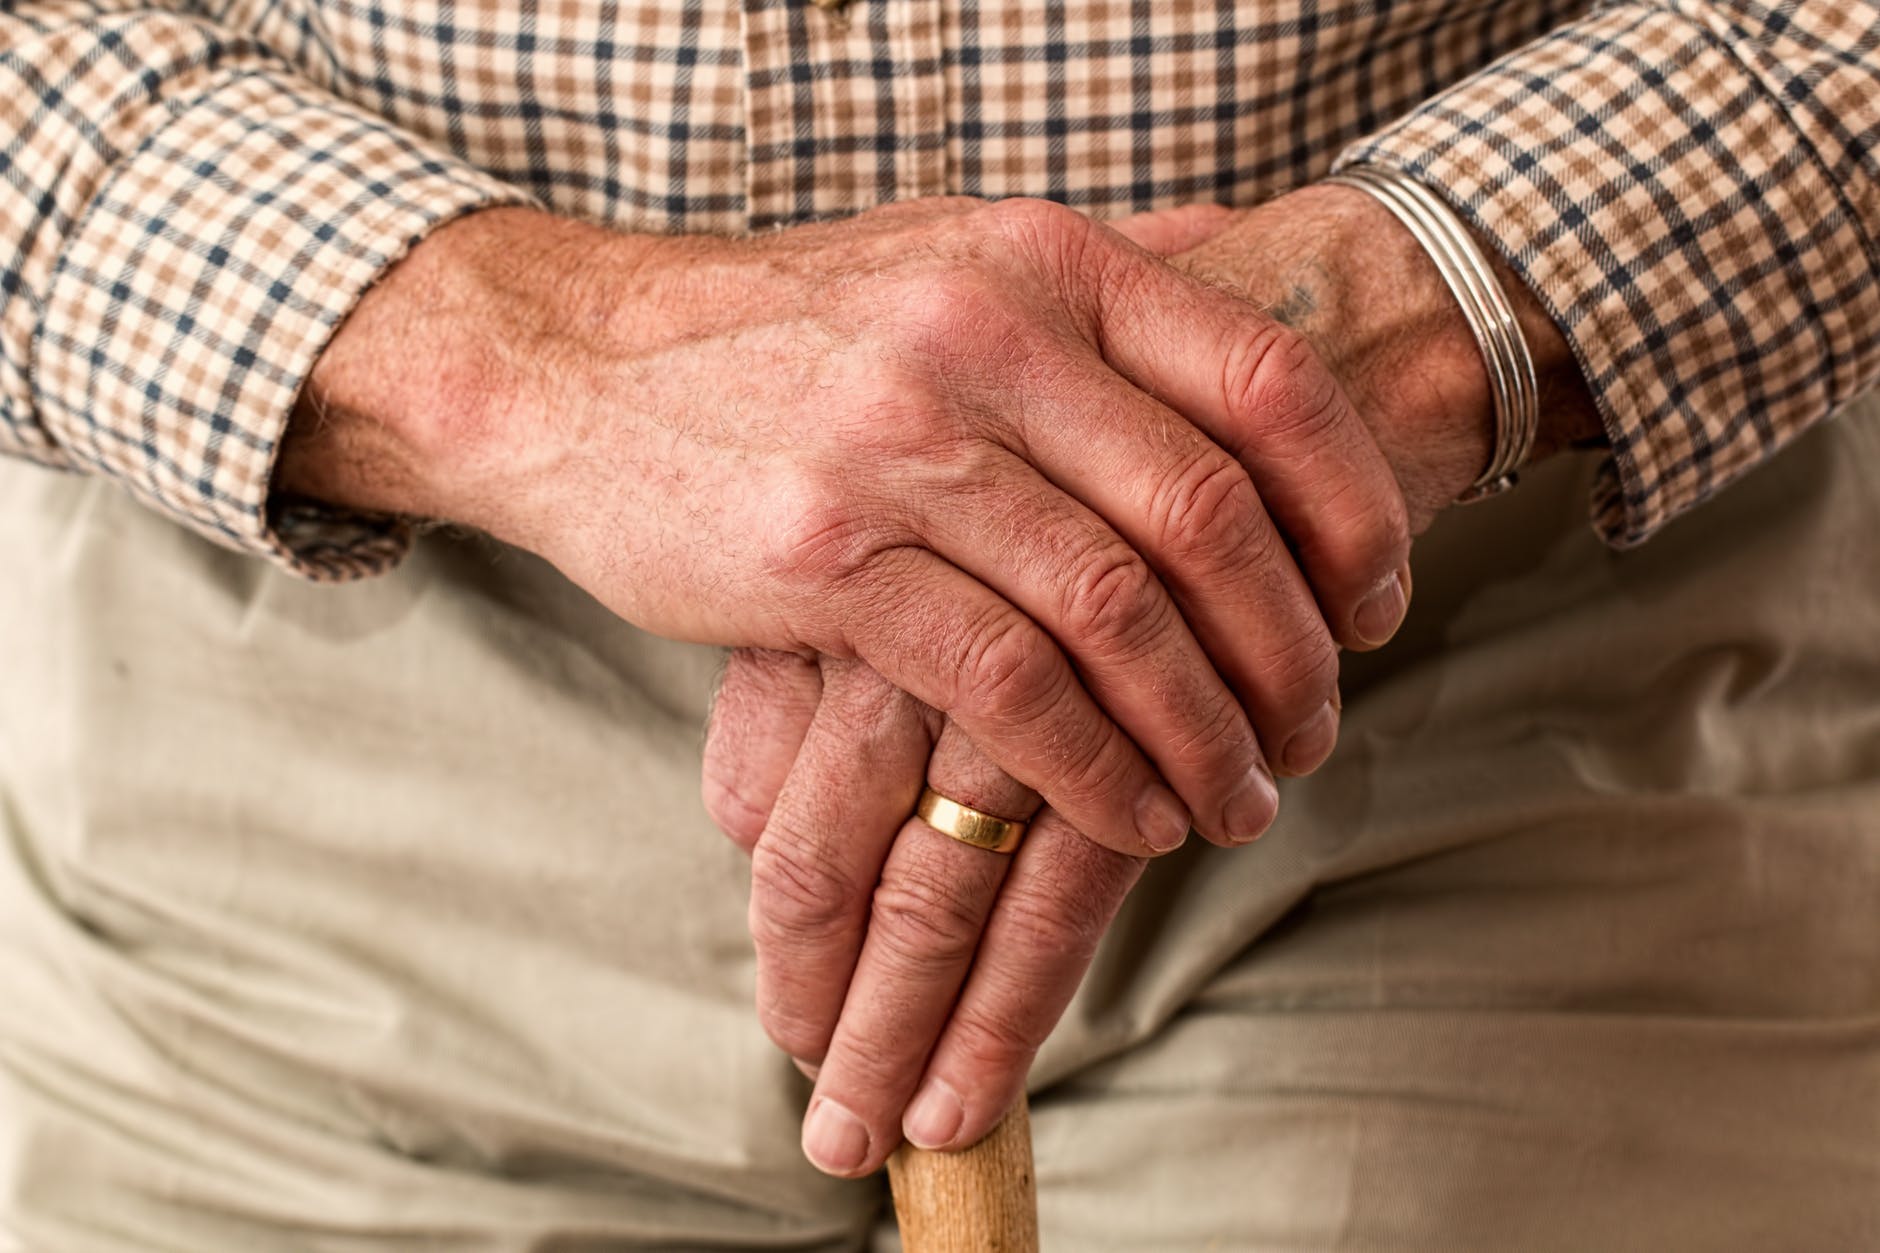  cura anziani caregiver